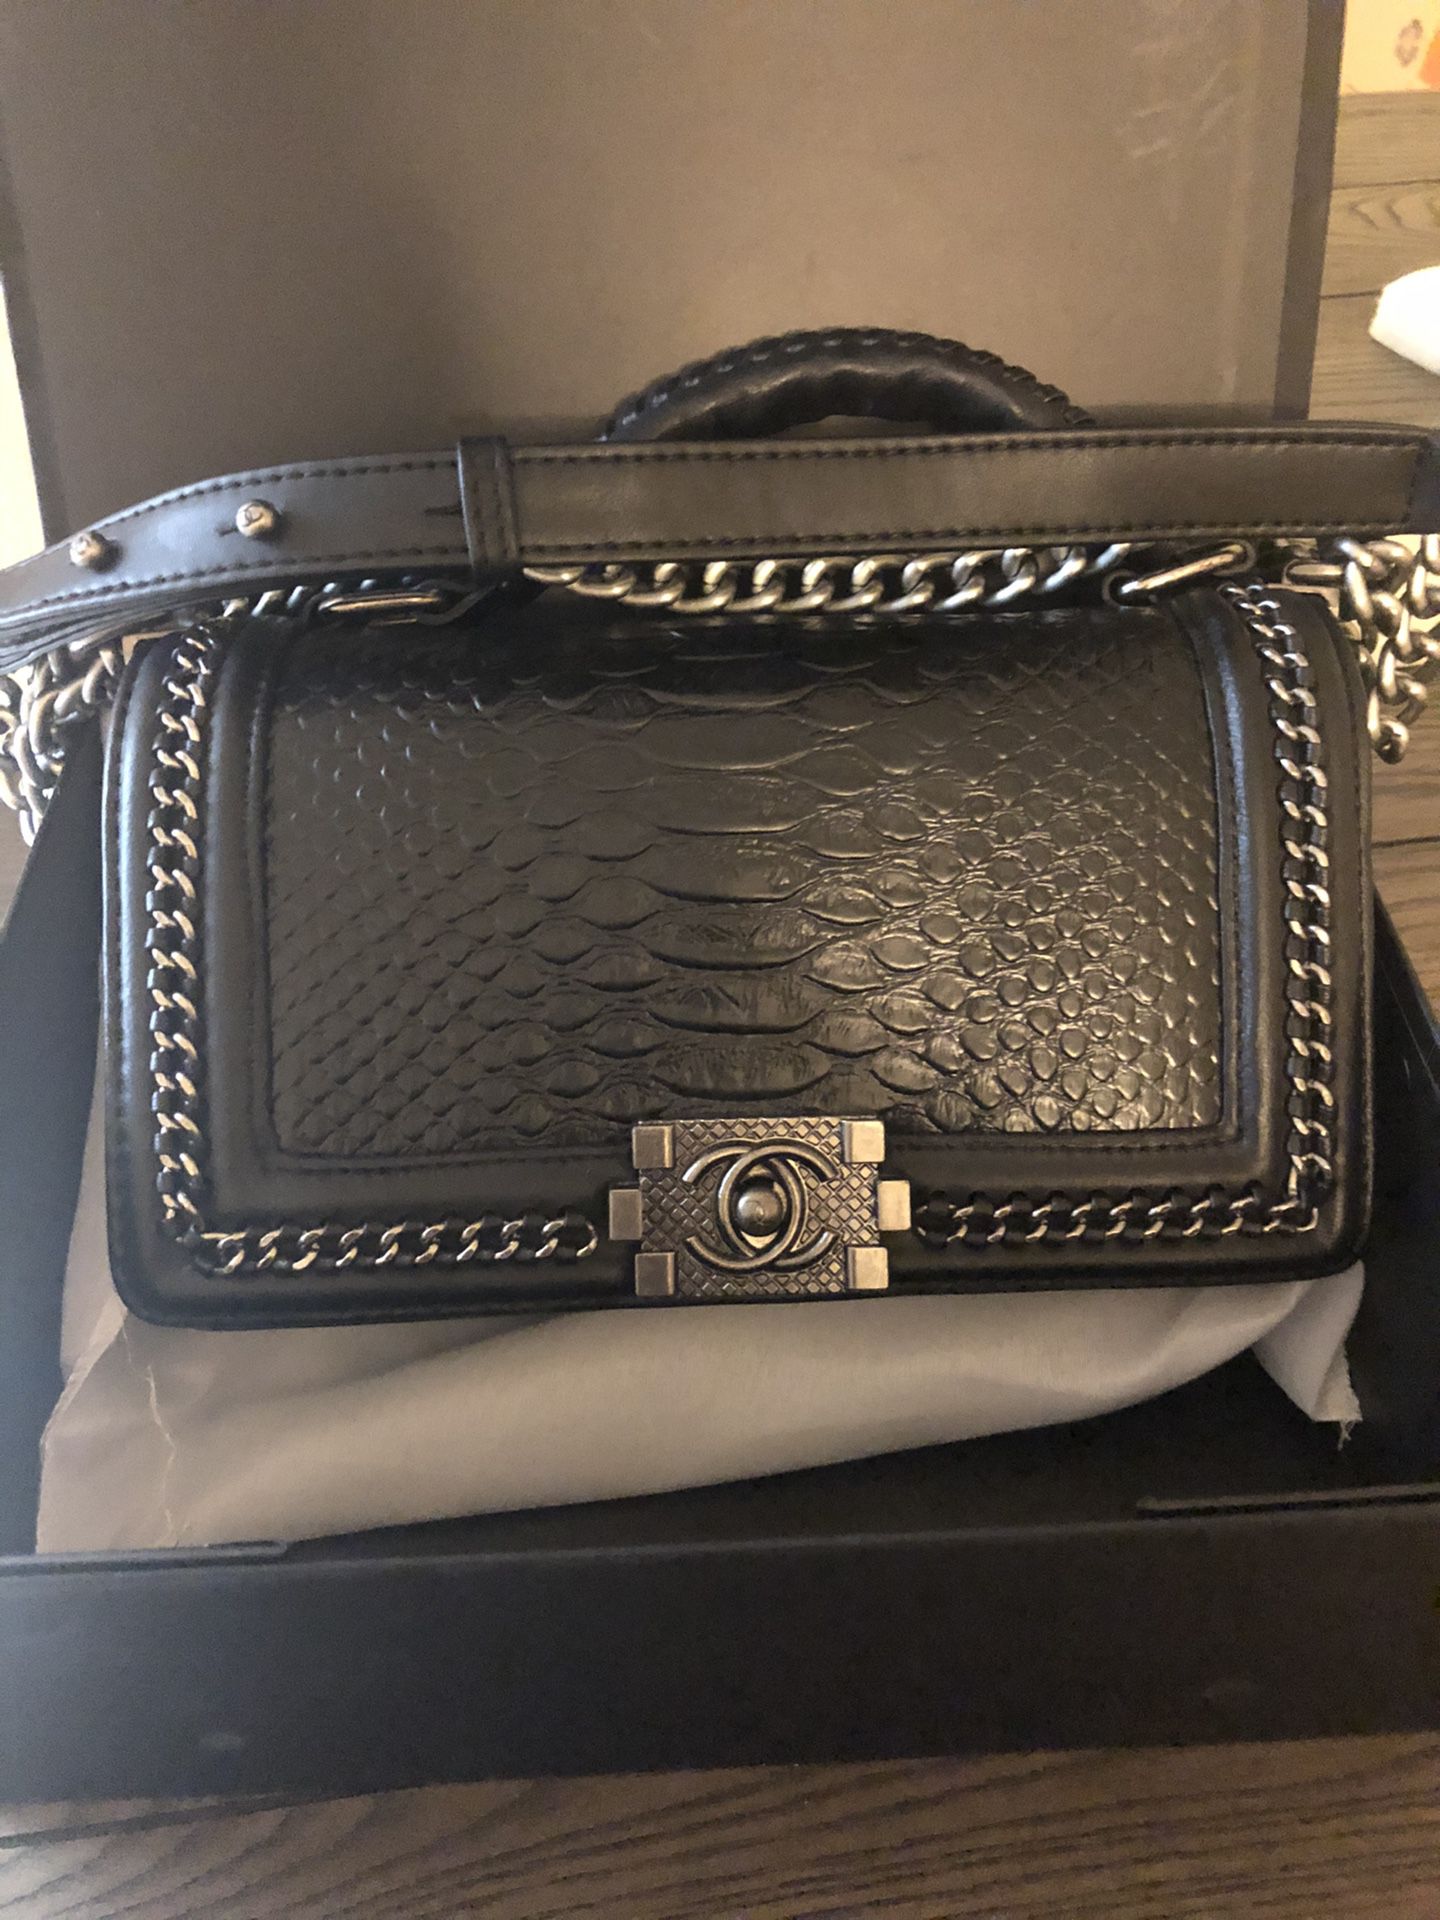 Brand new Chanel Le Boy bag